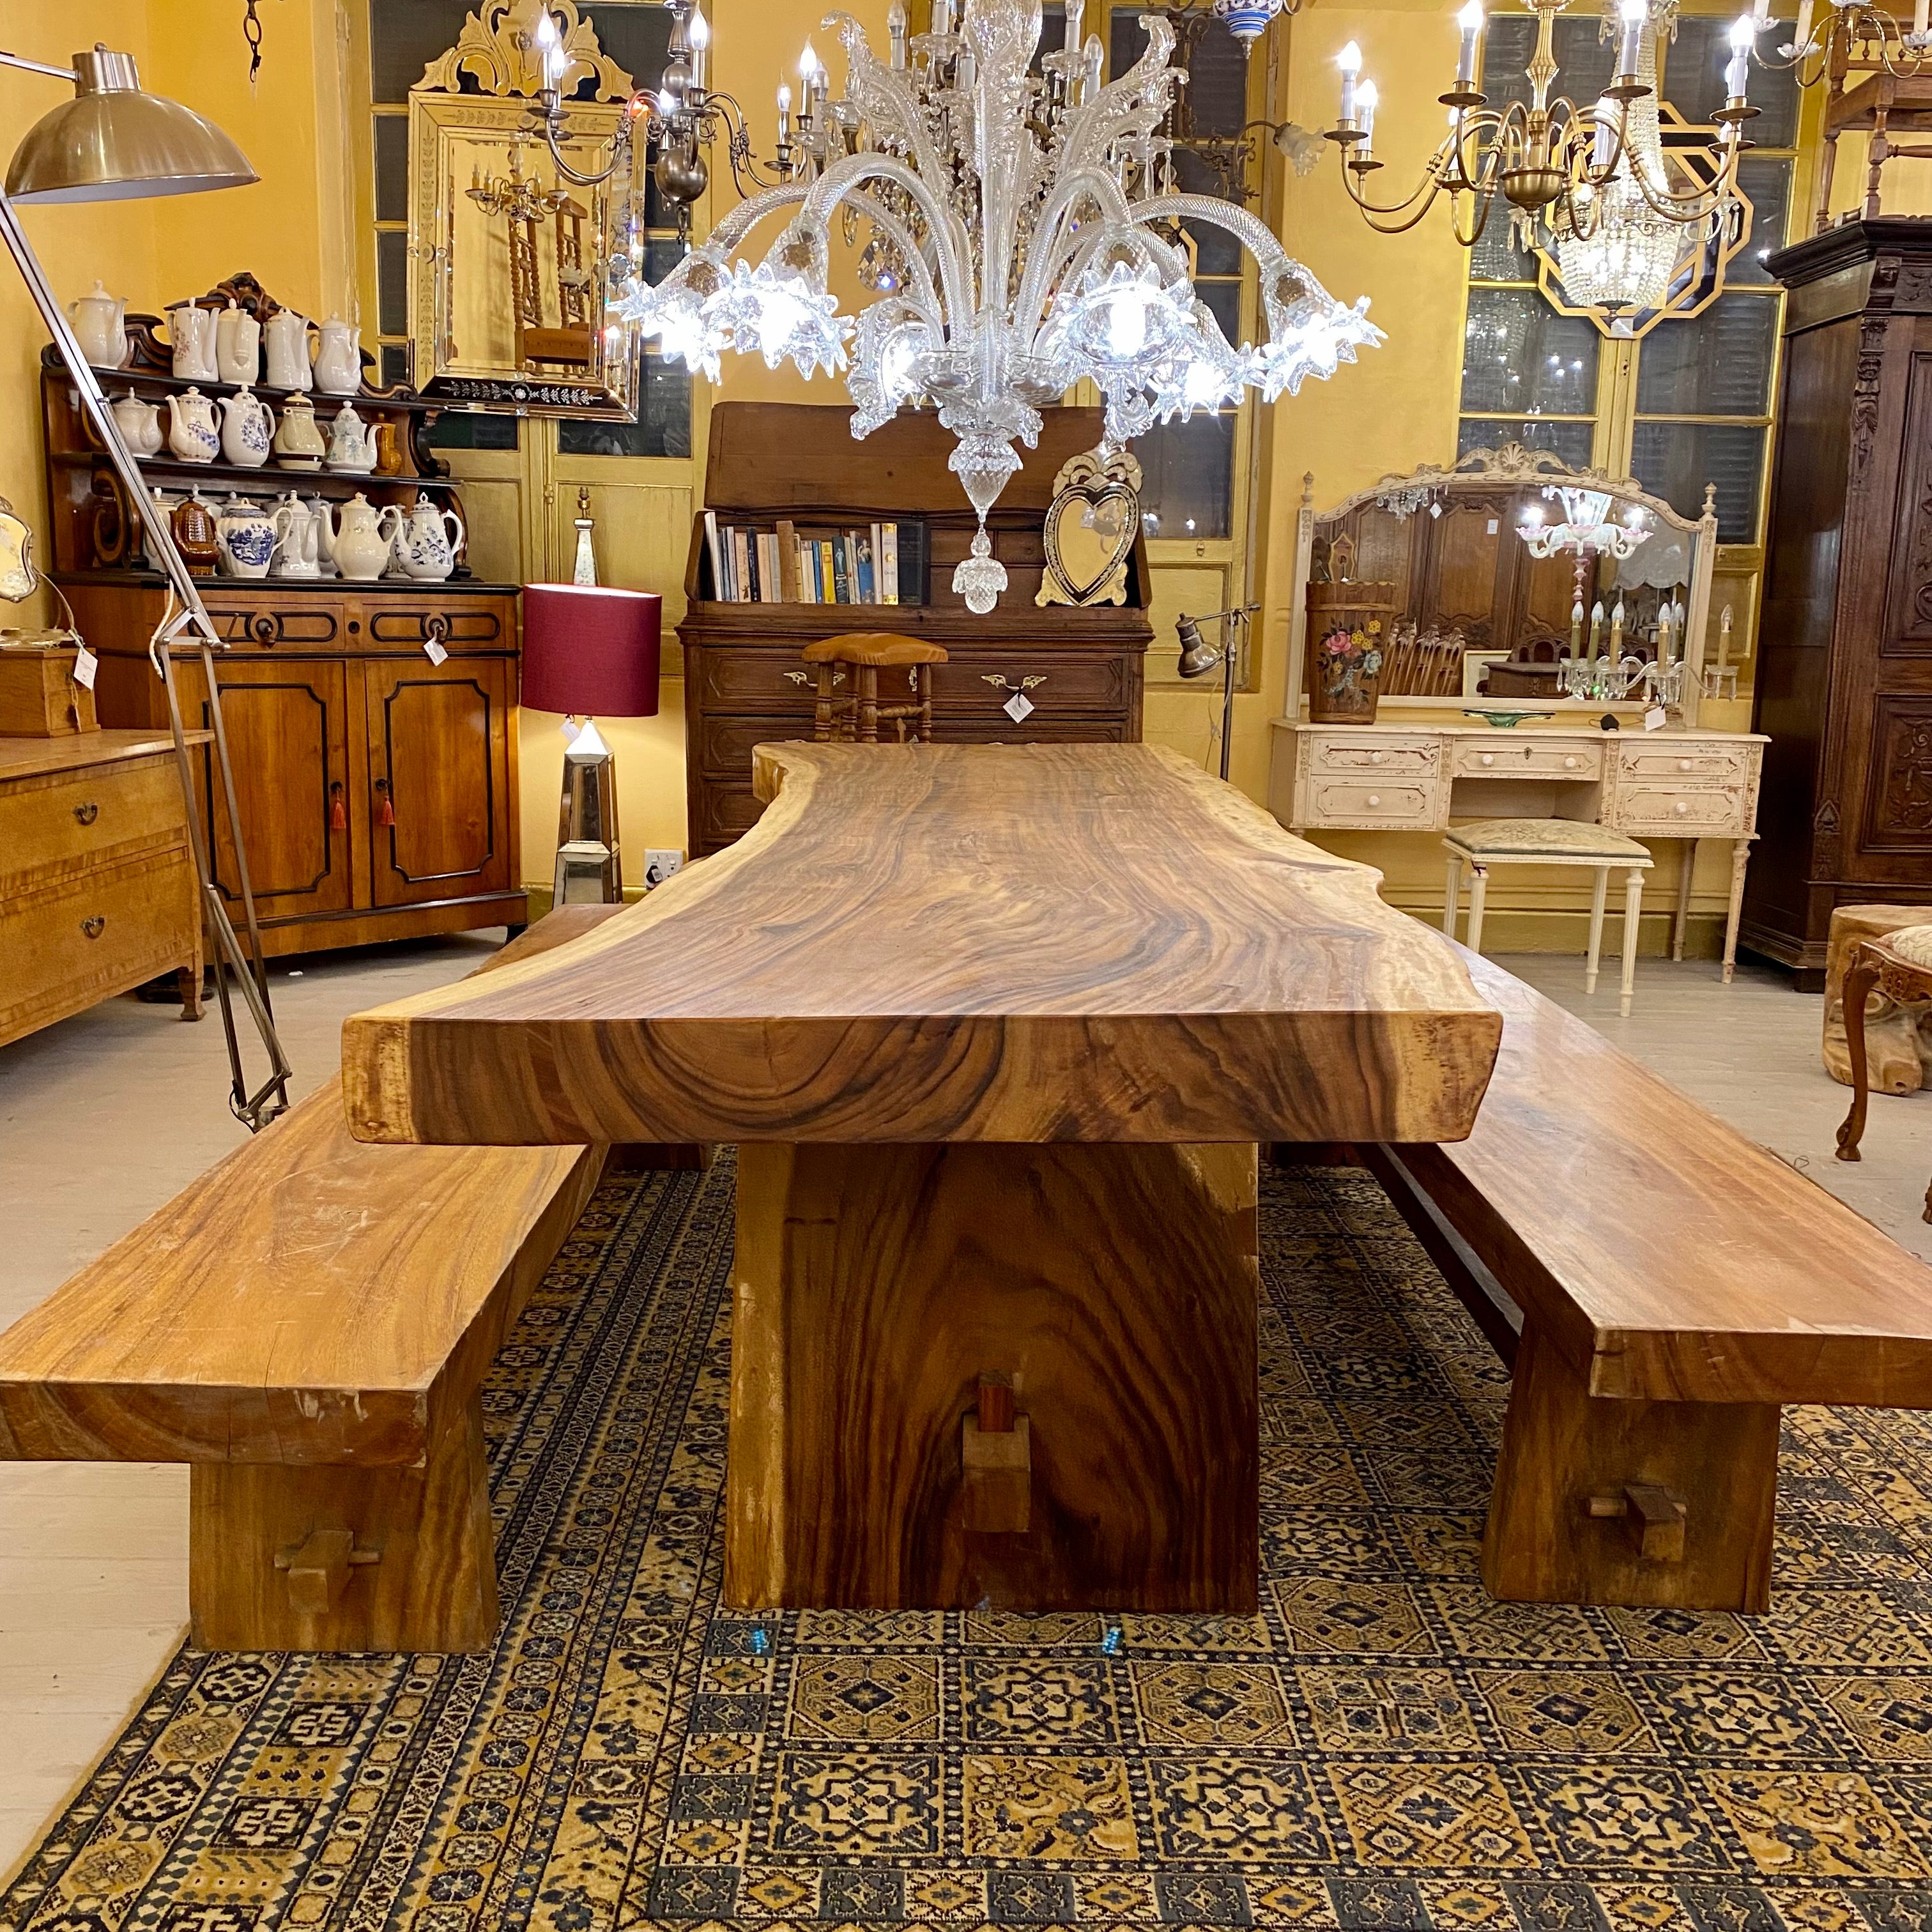 cedar wood furniture